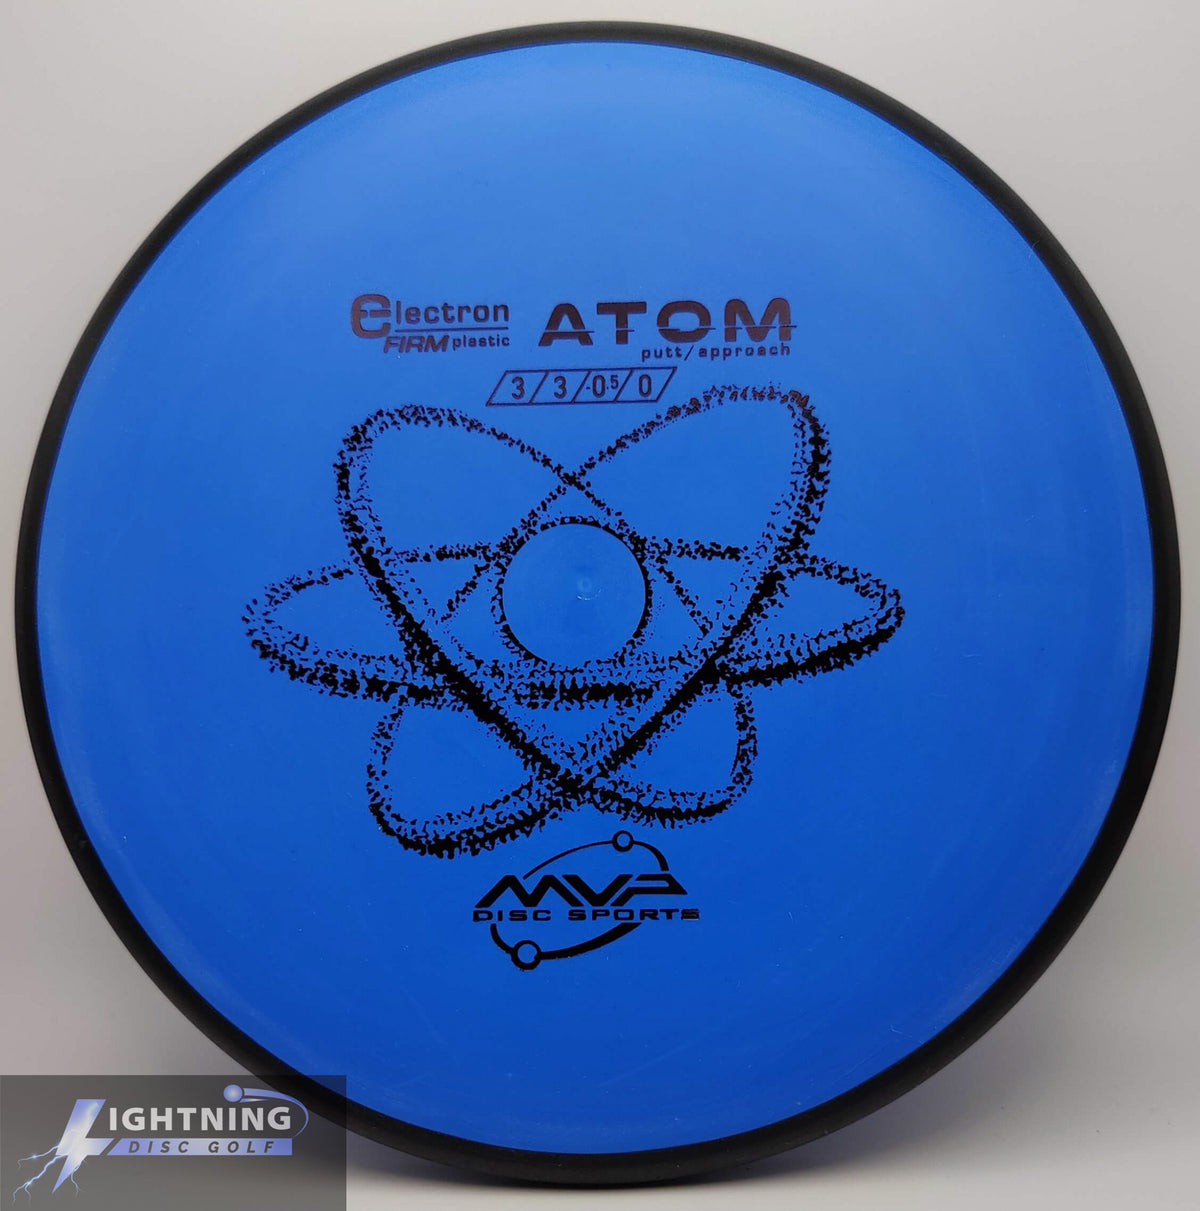 MVP Atom - Electron Firm